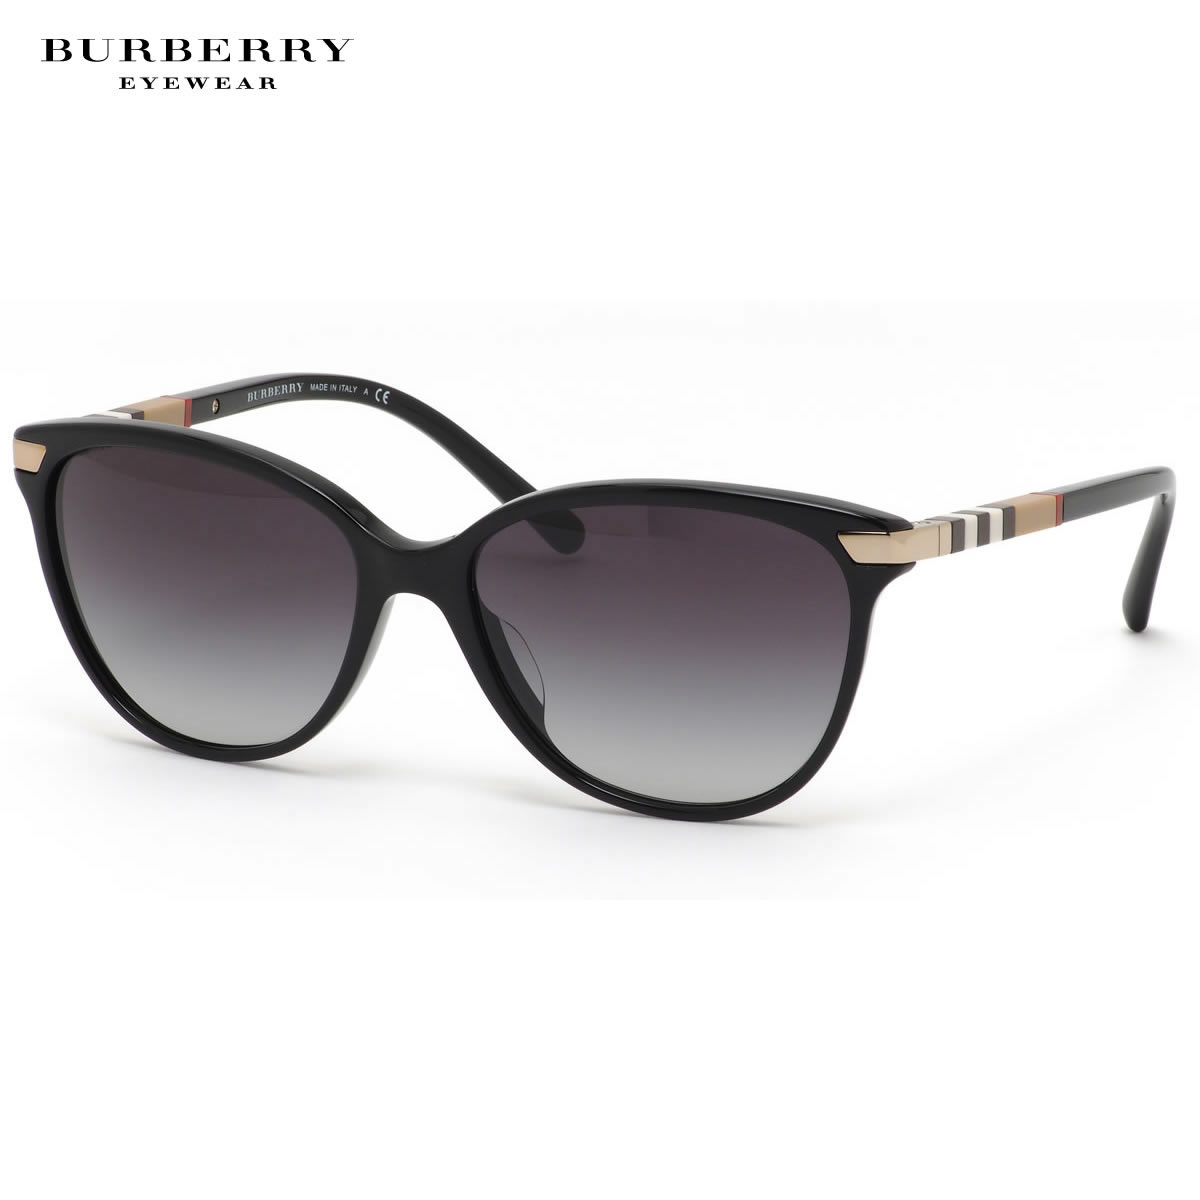 burberry sunglasses sale